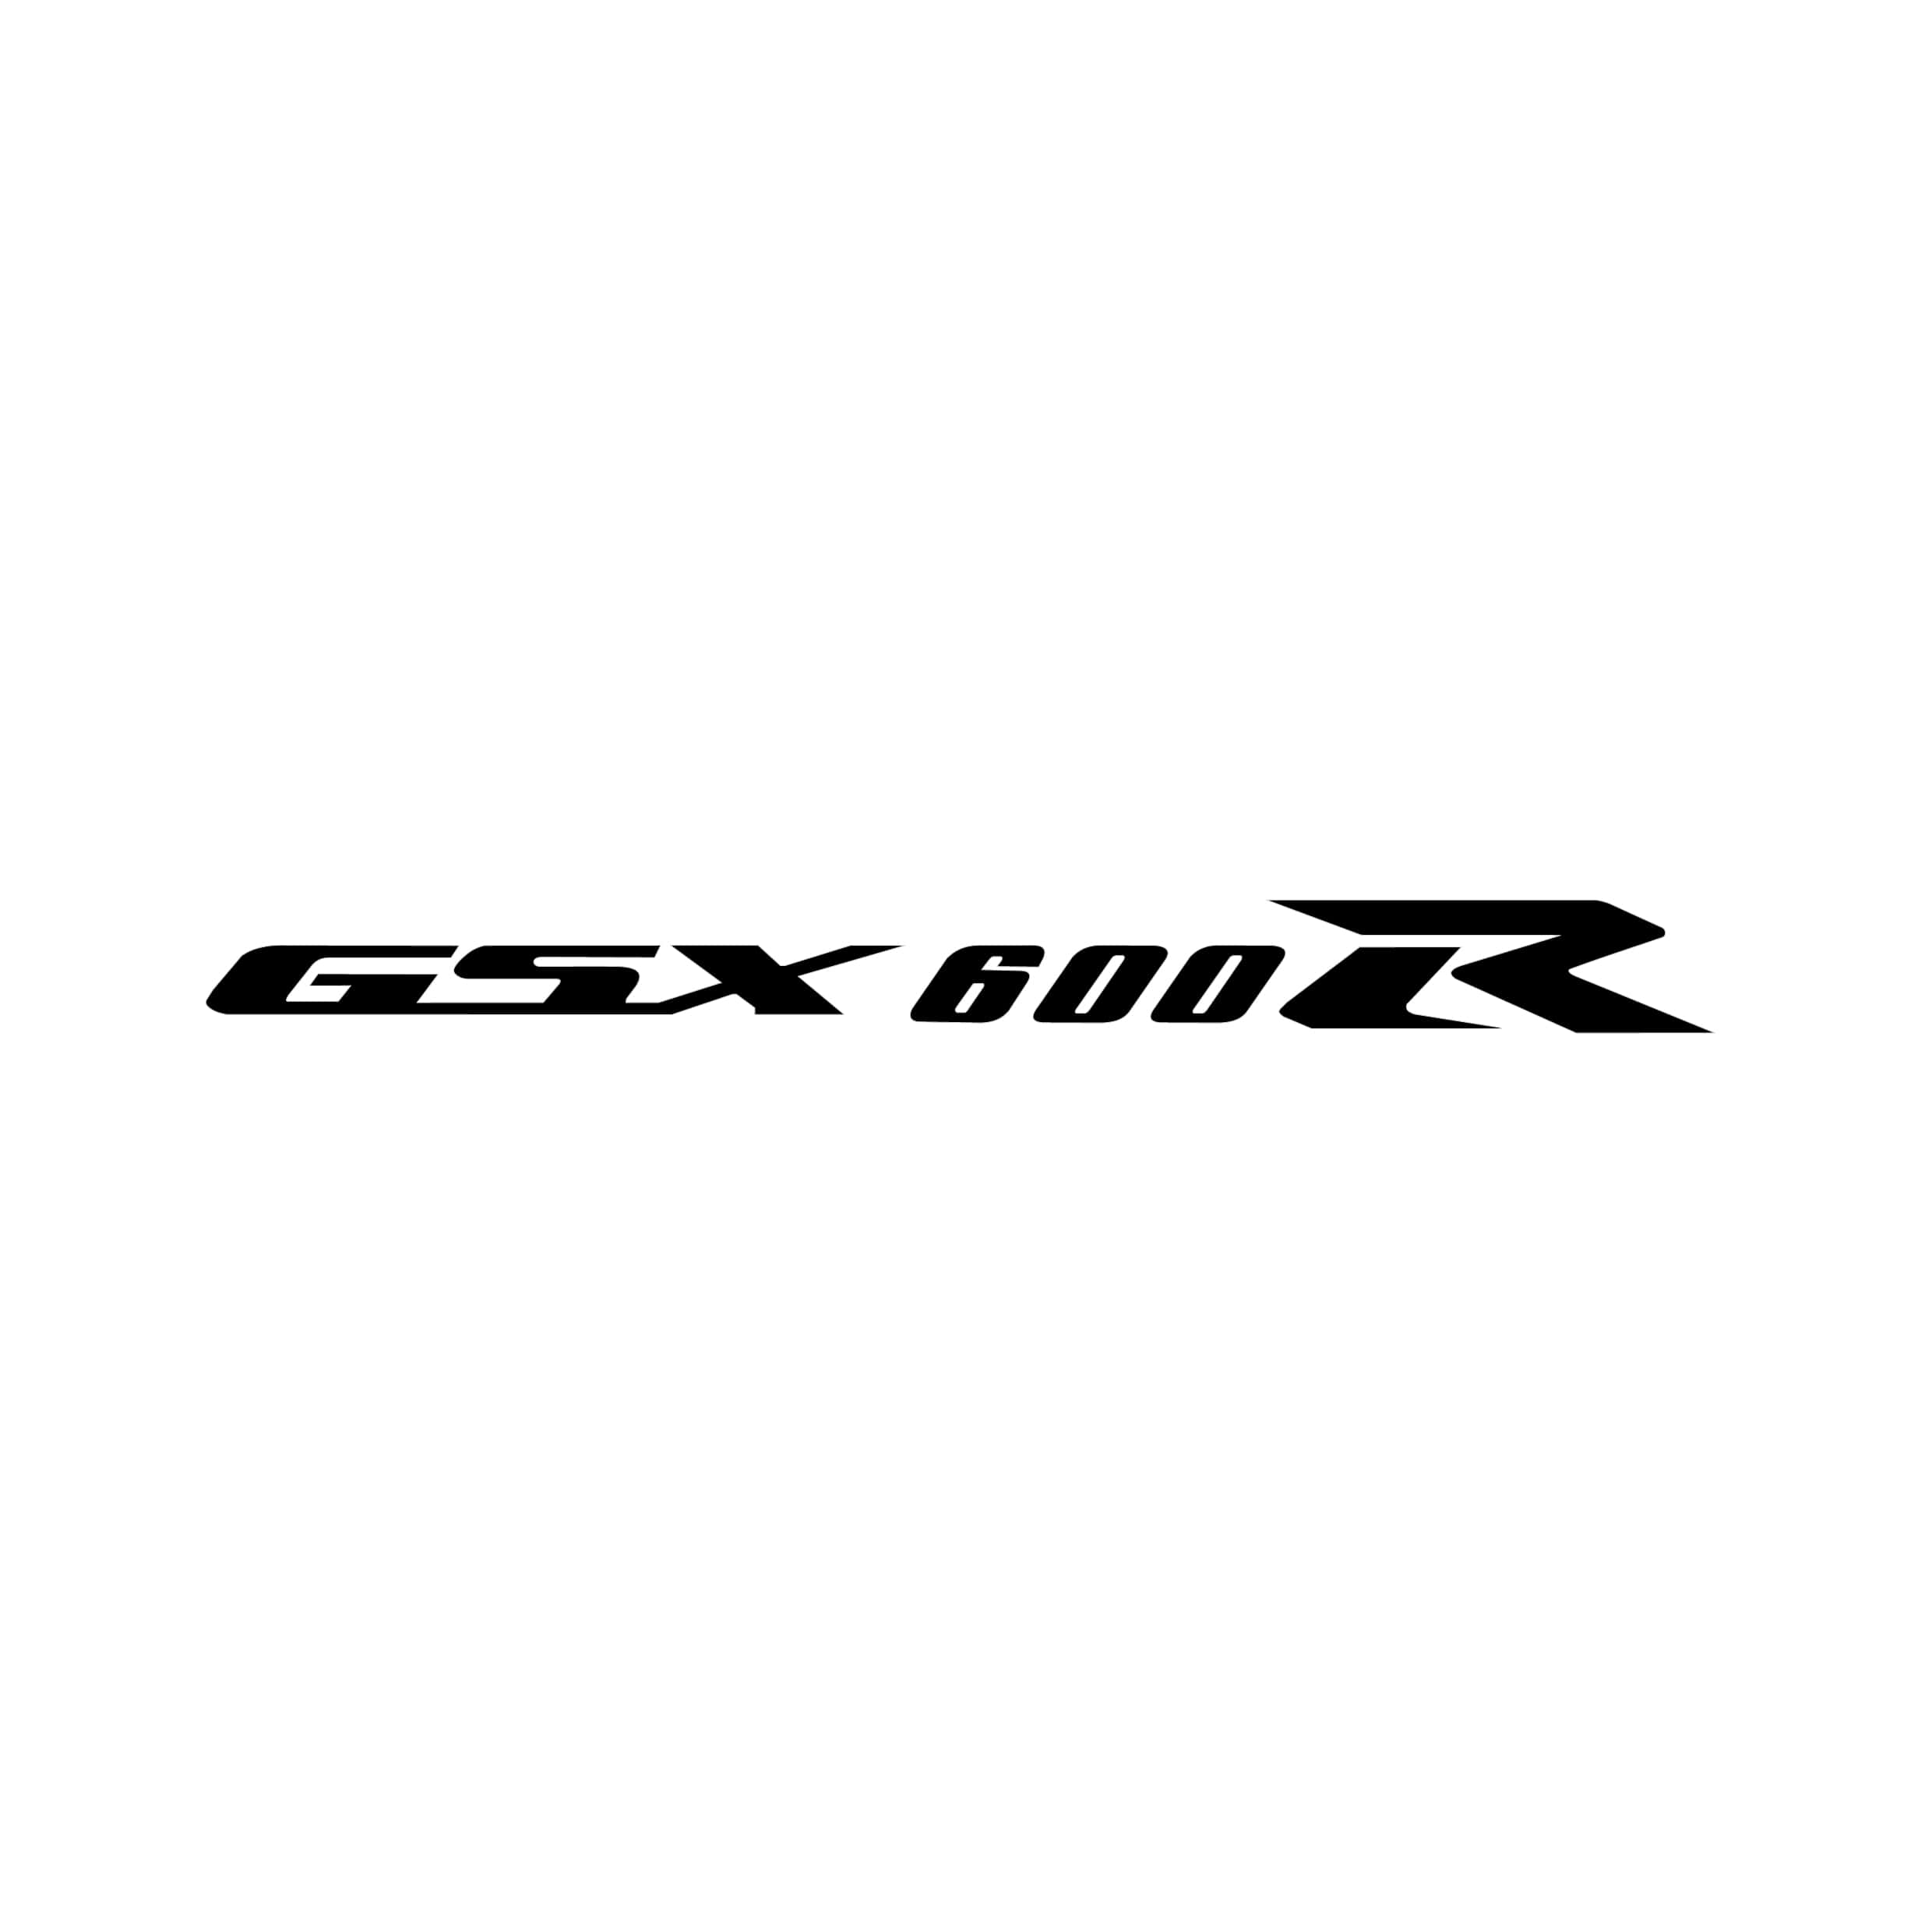 stickers-gsx-600r-suzuki-ref53-autocollant-moto-sticker-deux-roue-autocollants-decals-sponsors-tuning-sport-logo-bike-scooter-min